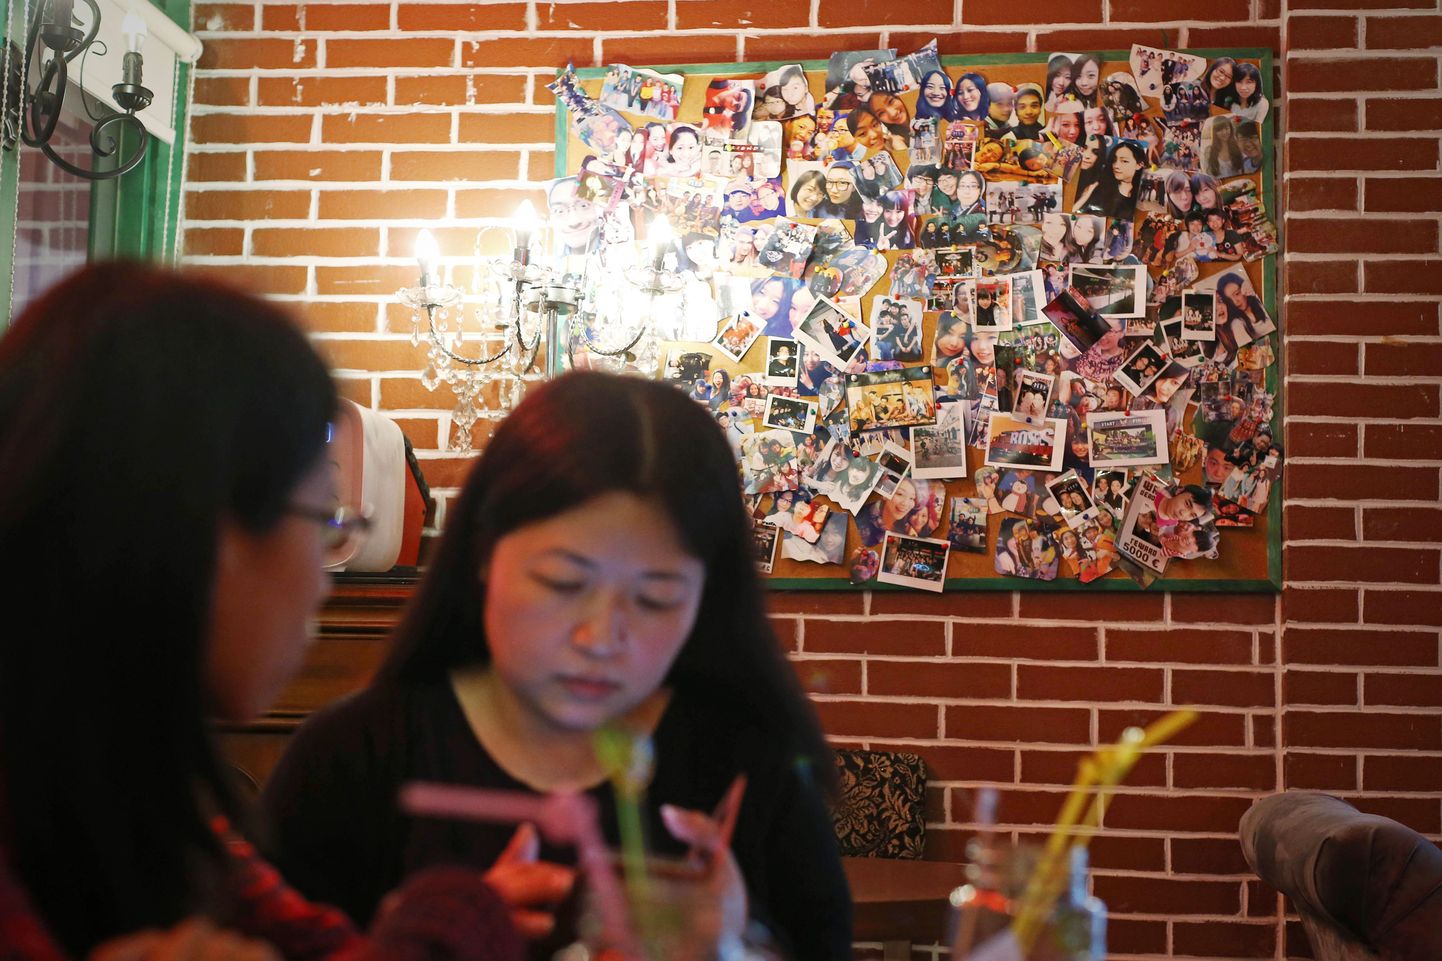 Shanghai noored kohvikus.